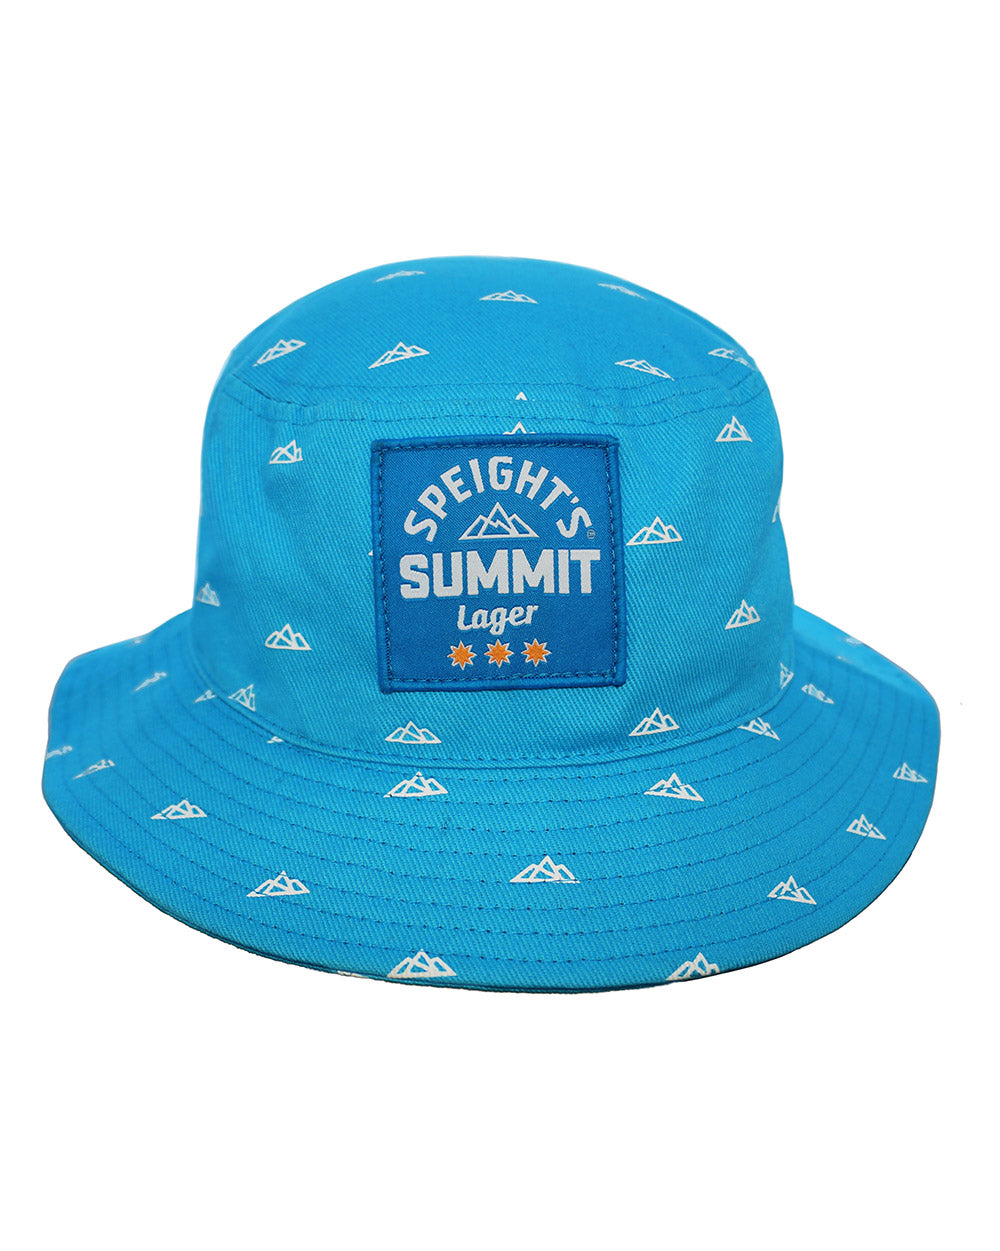 Summit Bucket Hat -  Beer Gear Apparel & Merchandise - speights - lion red - vb - tokyo dry merch